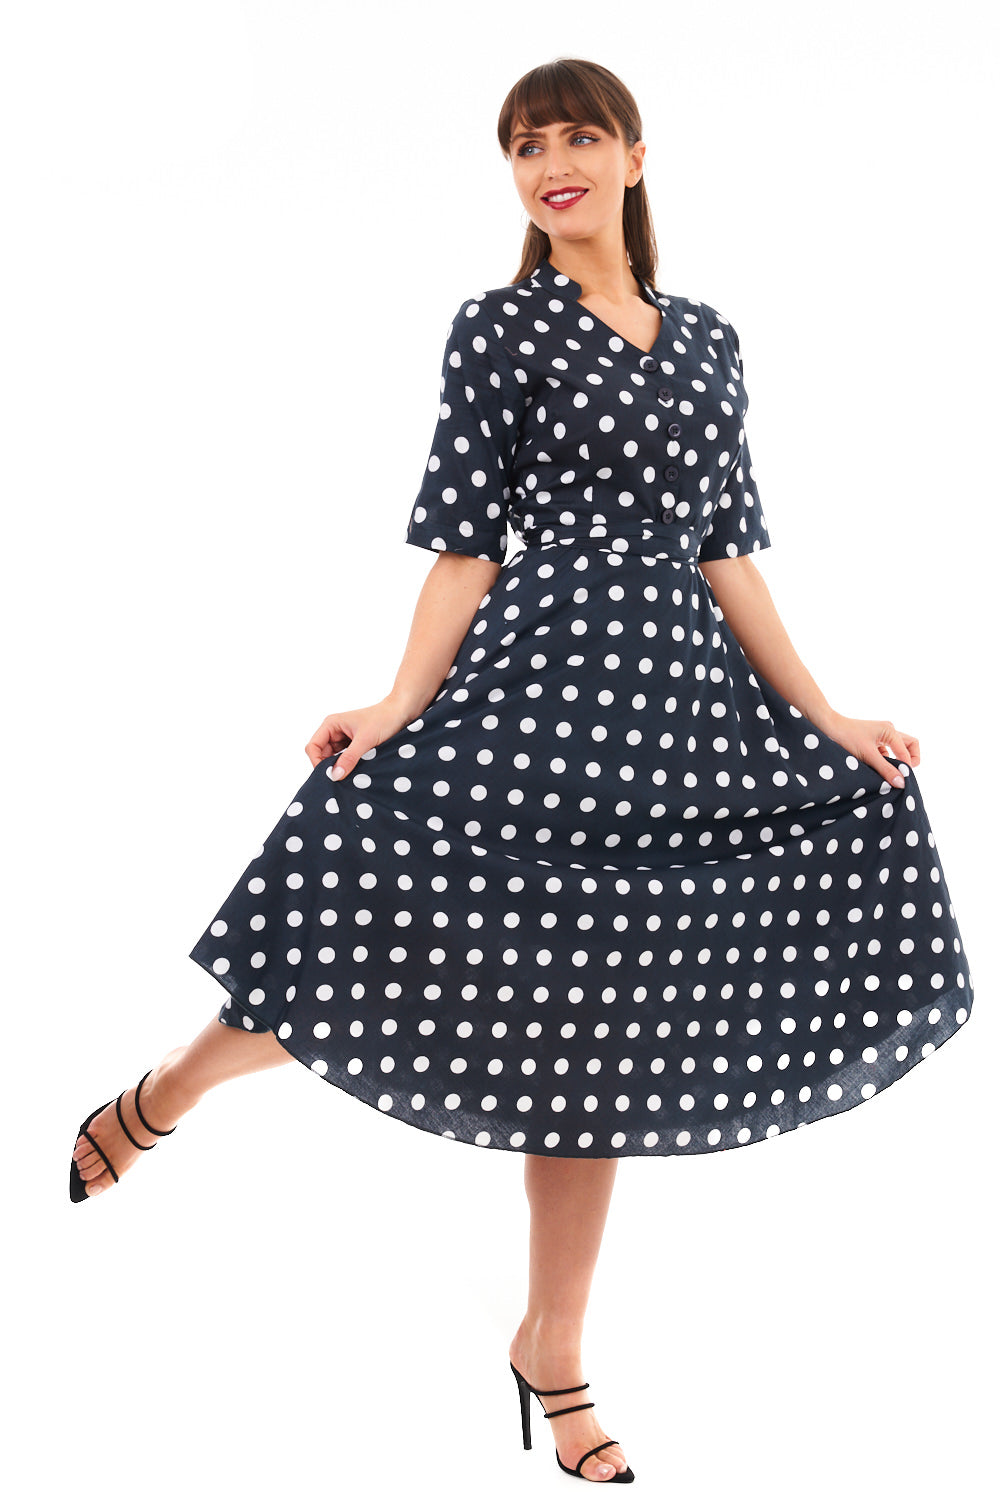 Retro Vintage 1940's Polka Dot Shirt Dress in Navy